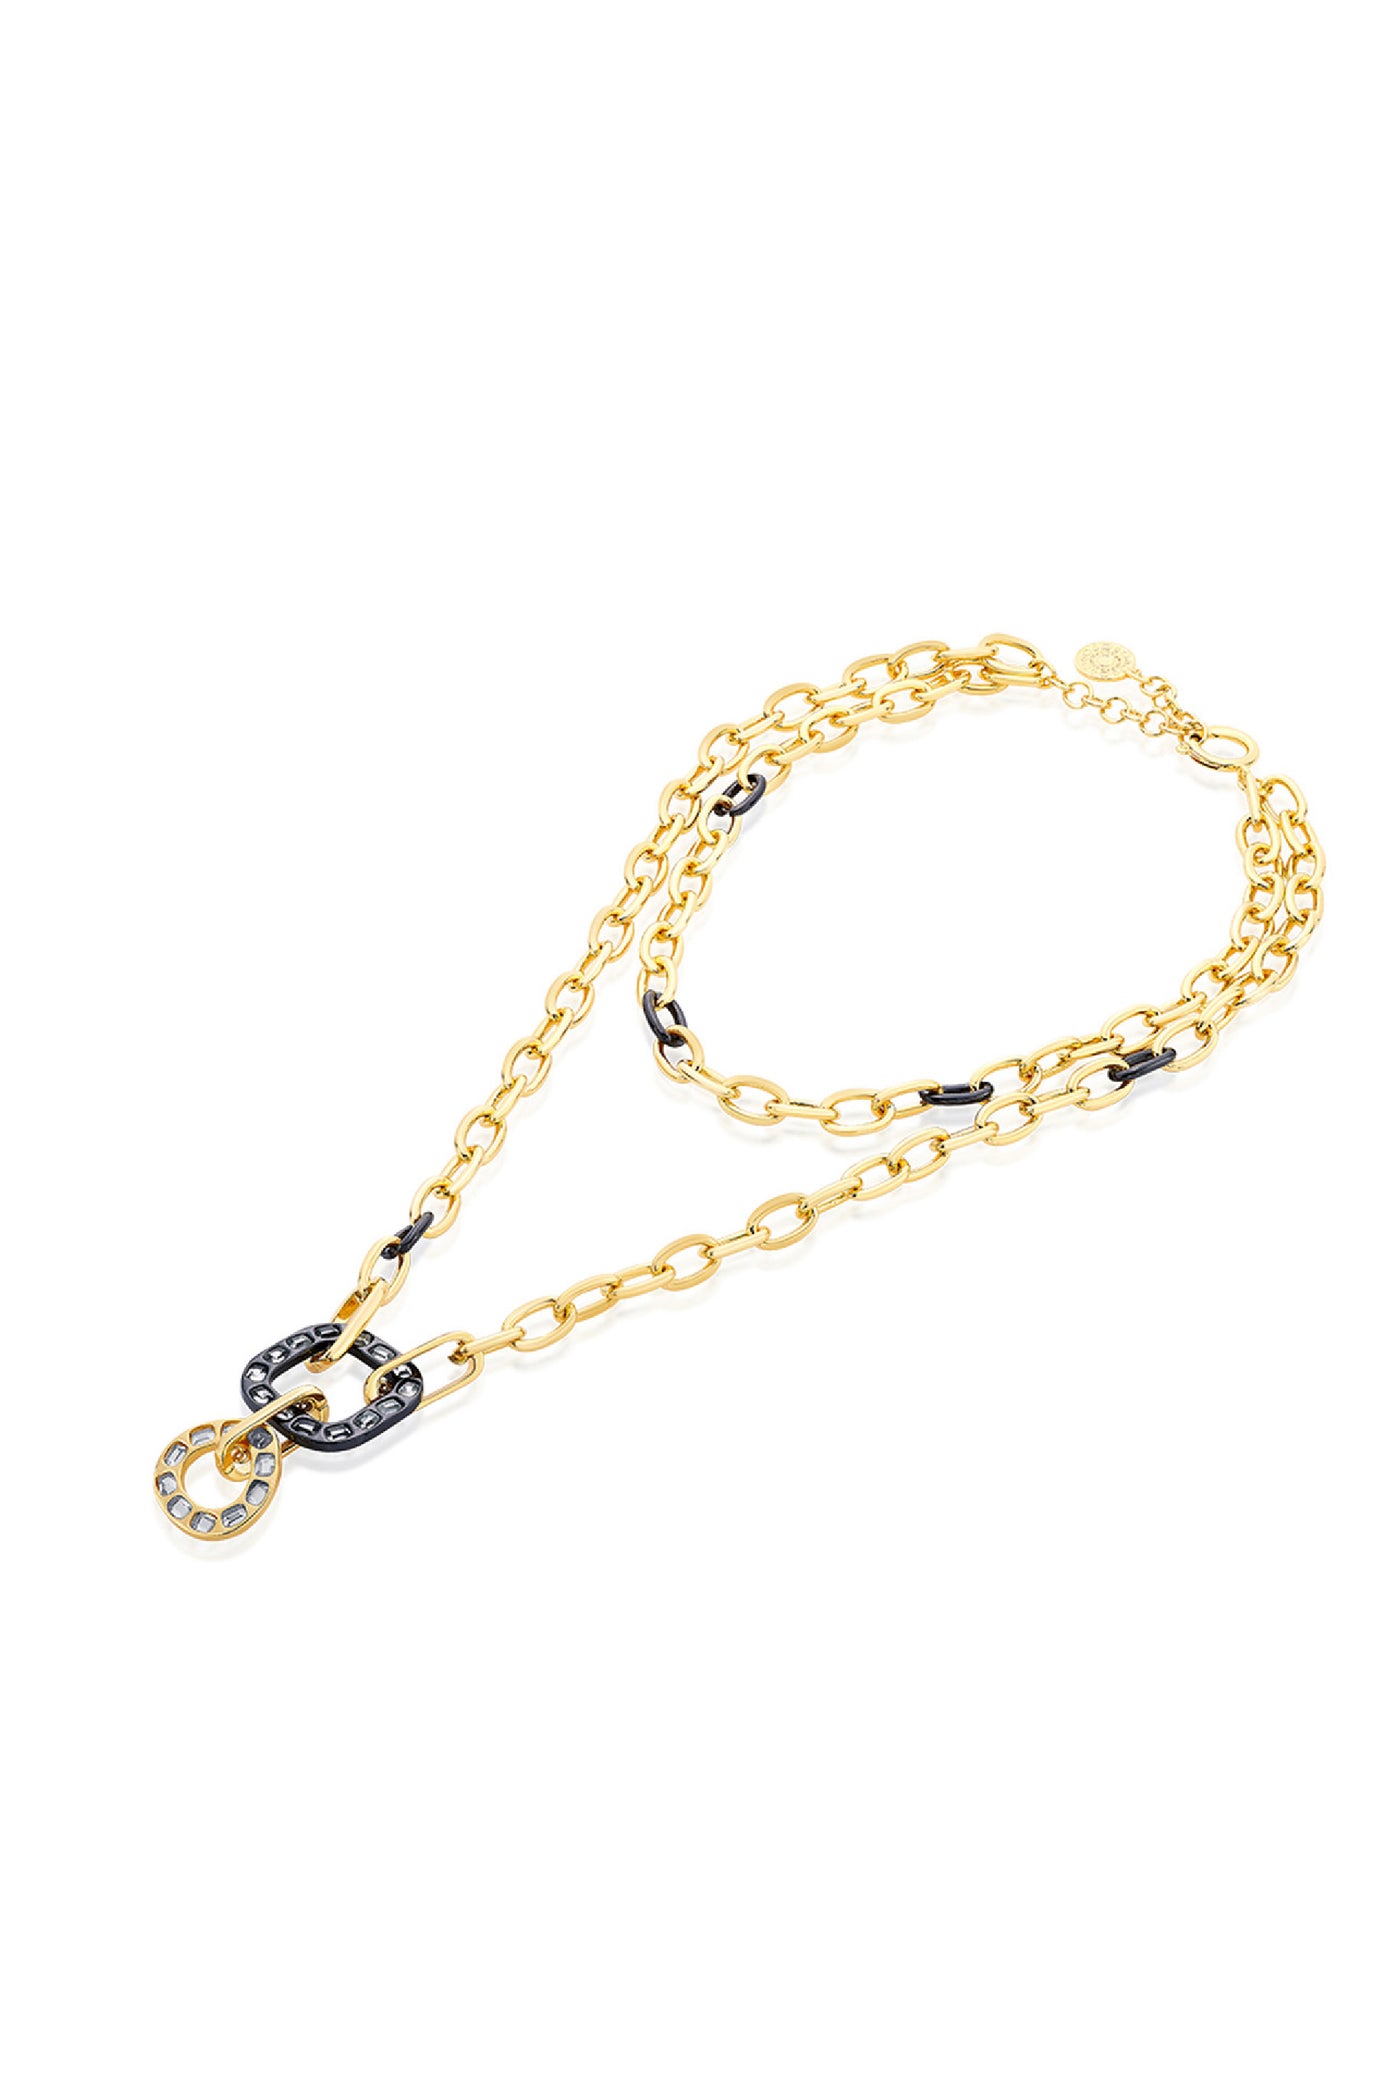 Isharya Stan Statement Link Necklace In 18kt Gold & Rhodium Plated jewellery indian designer wear online shopping melange singapore